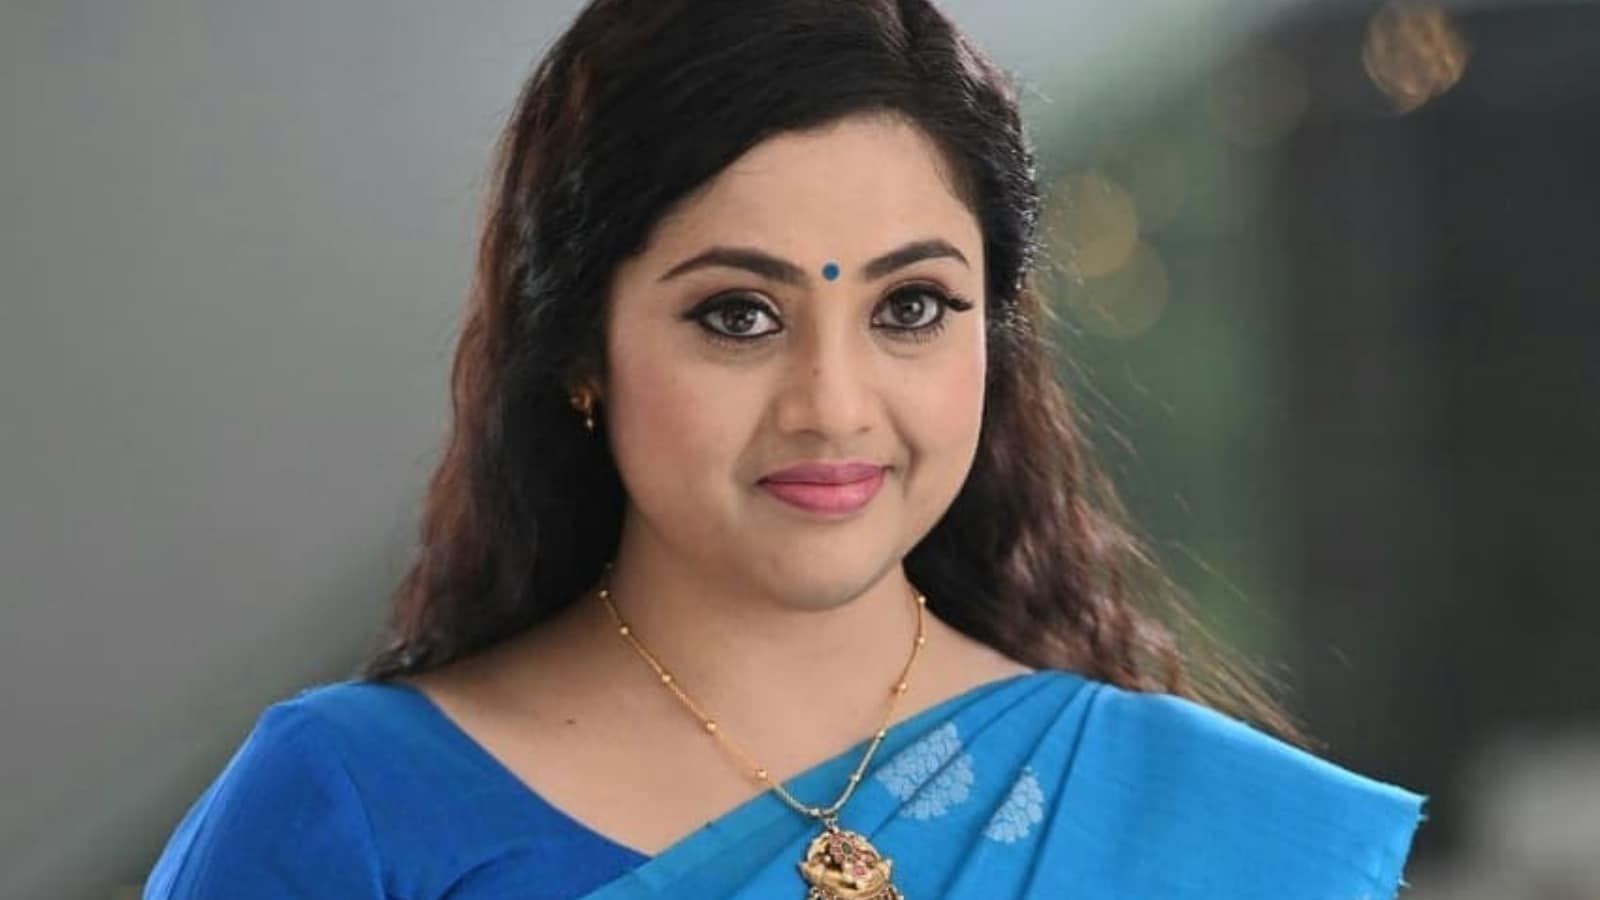 Sex Hd Meena Tamil Videos - Tamil Actor Meena Sagar, Her Family Test Positive For Covid-19 - News18